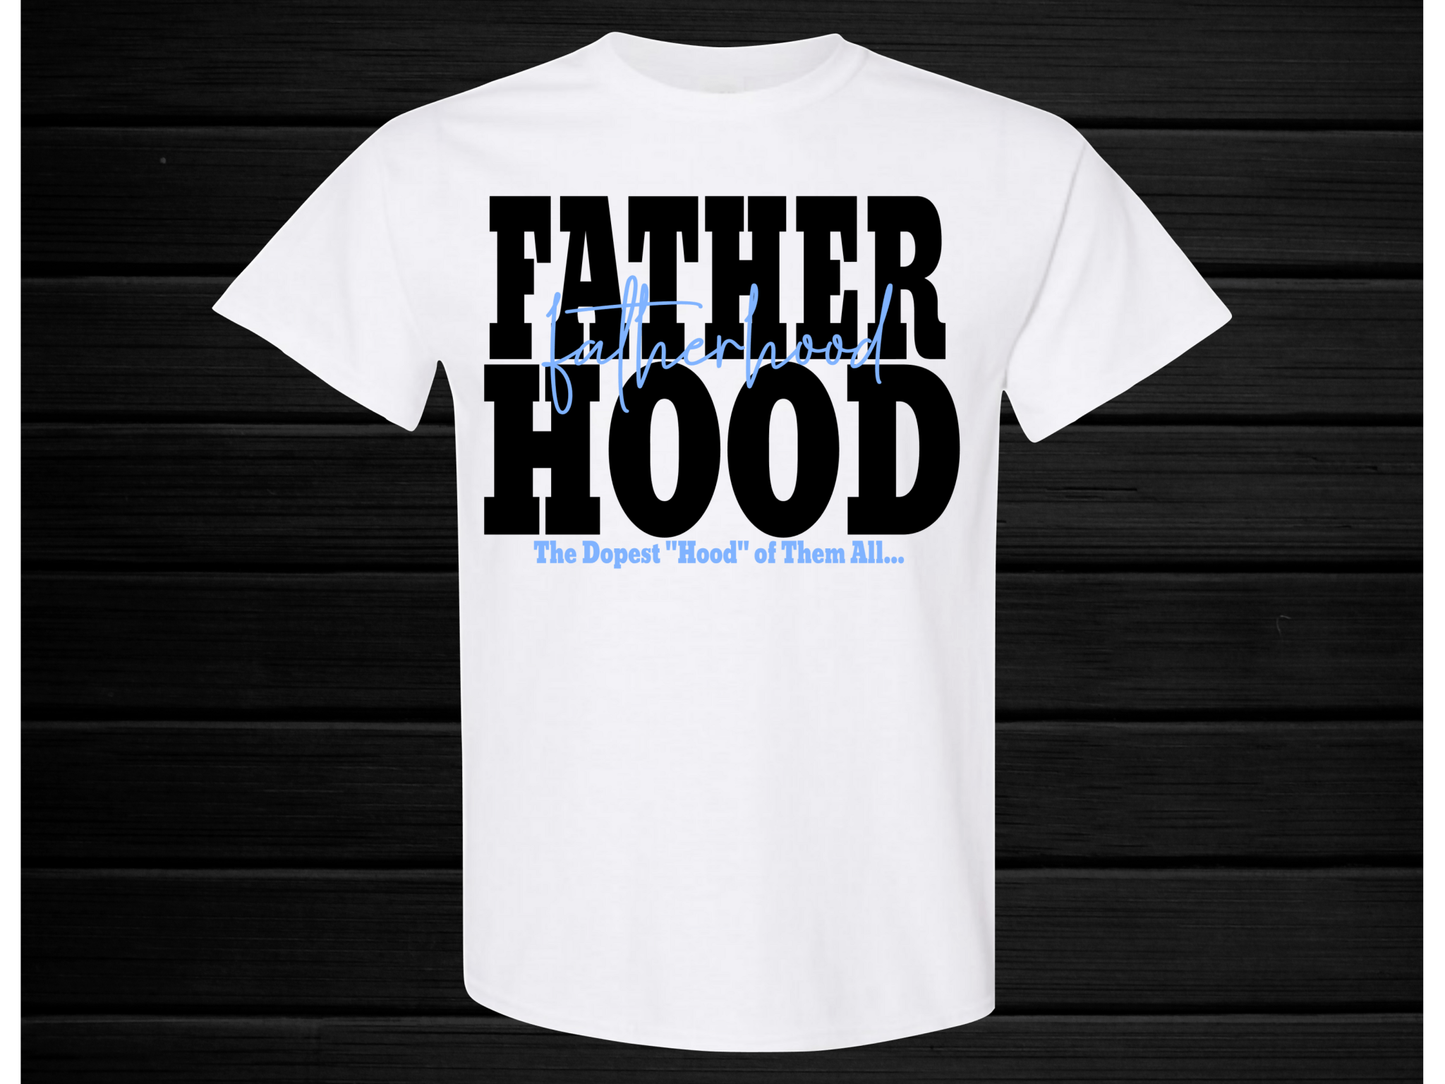 Fatherhood Shirt